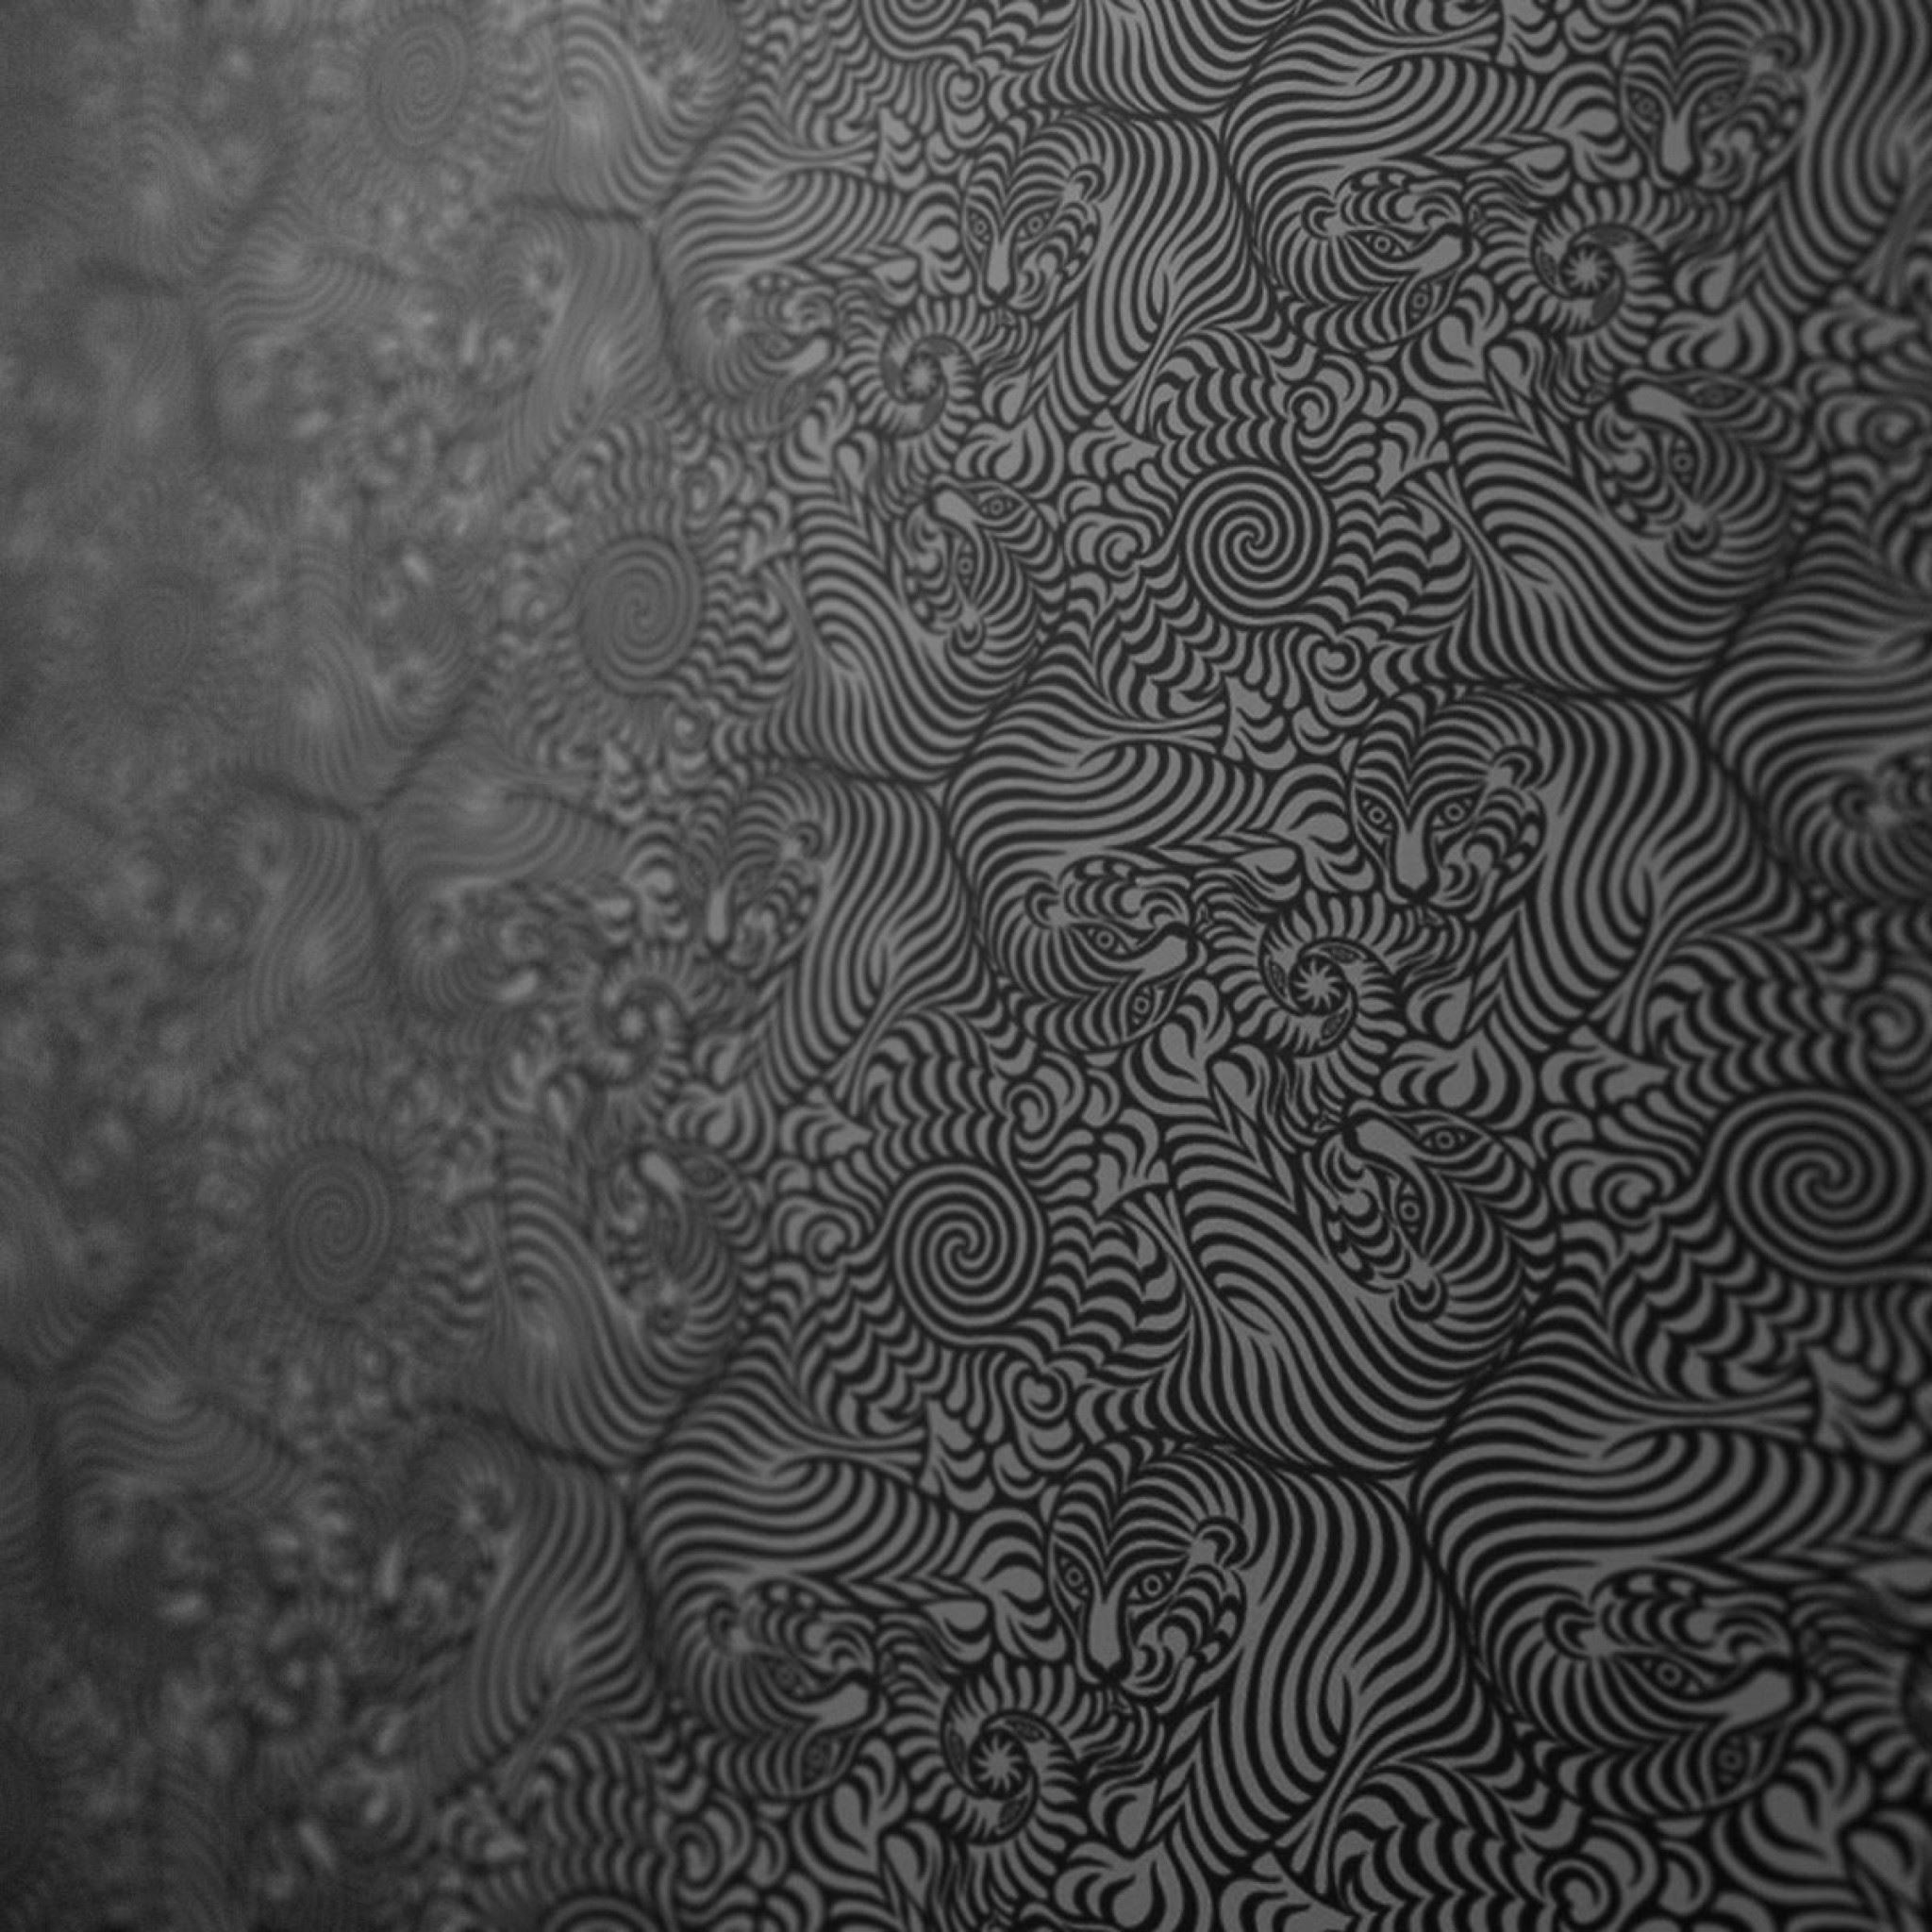 Texture Black White Patterns Tigers iPad Air wallpaper 